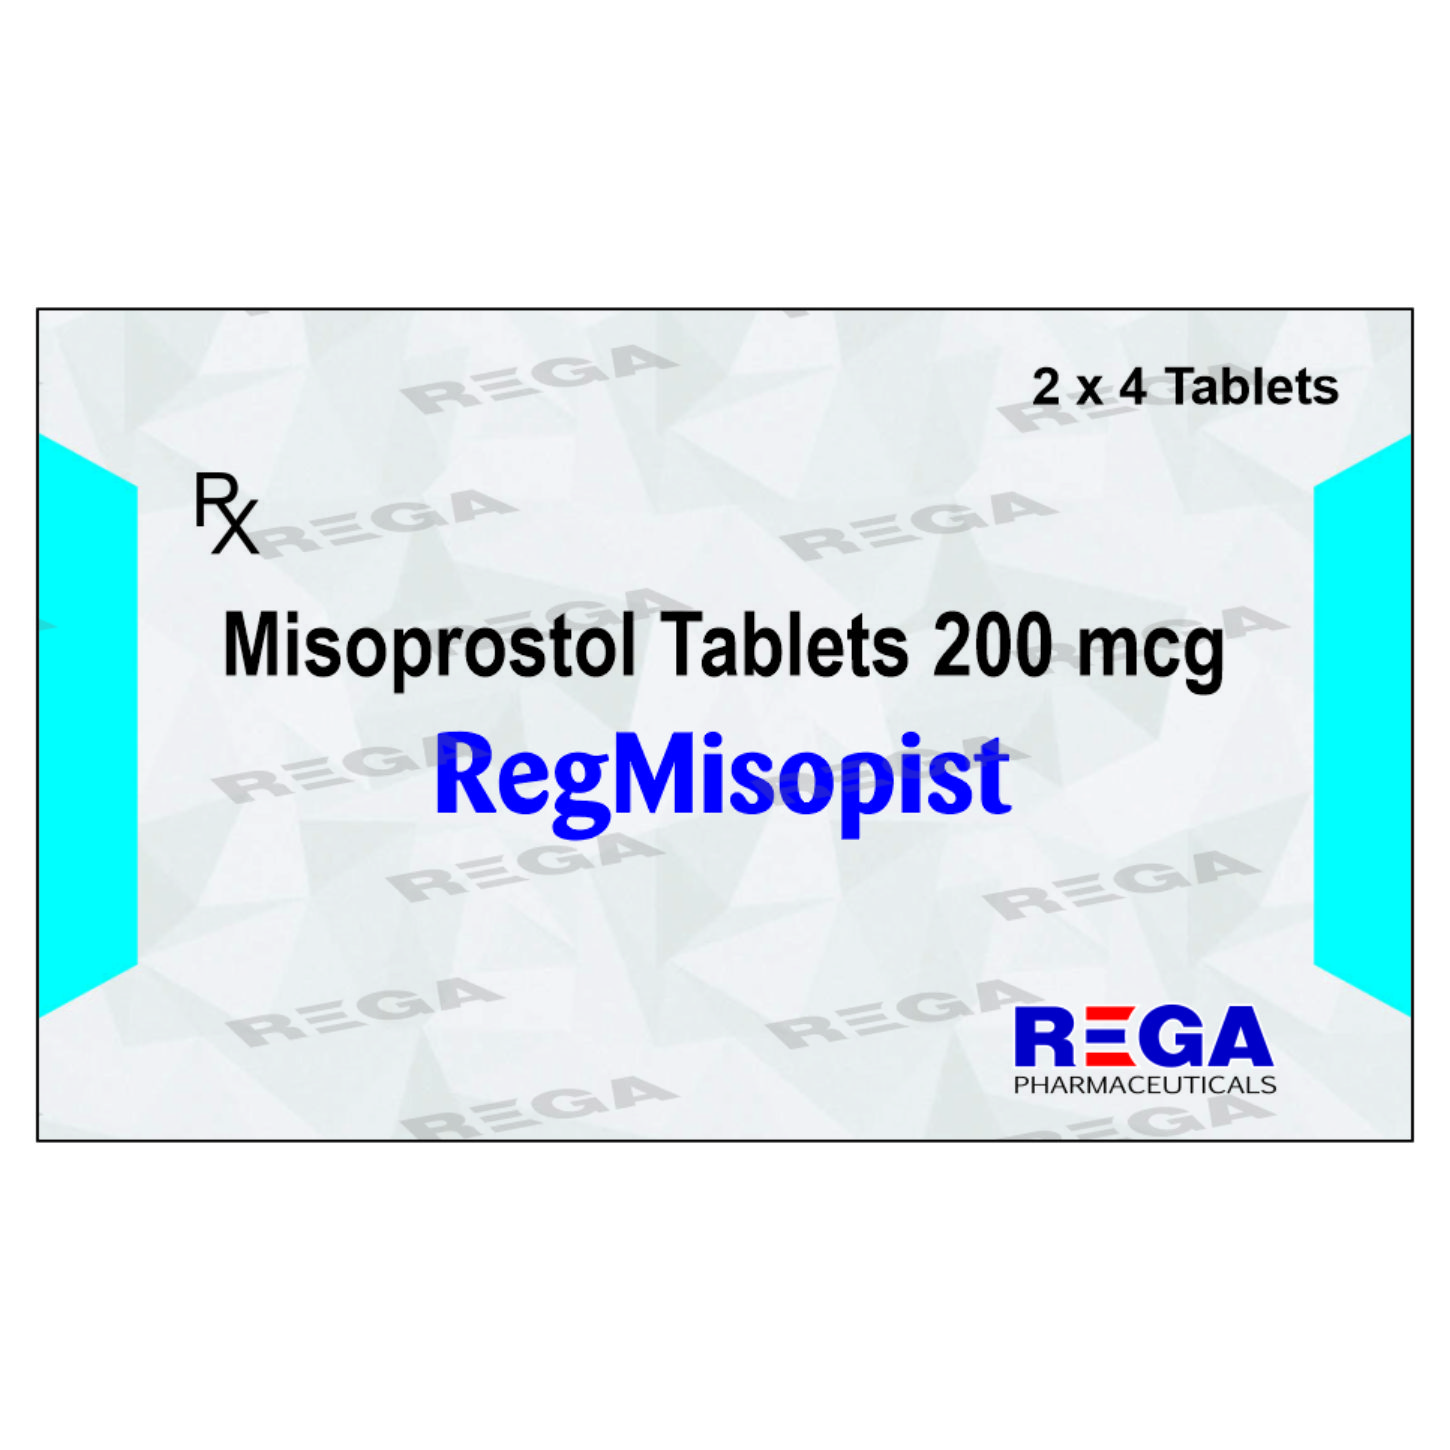 Misoprostol Tablets 200 mcg